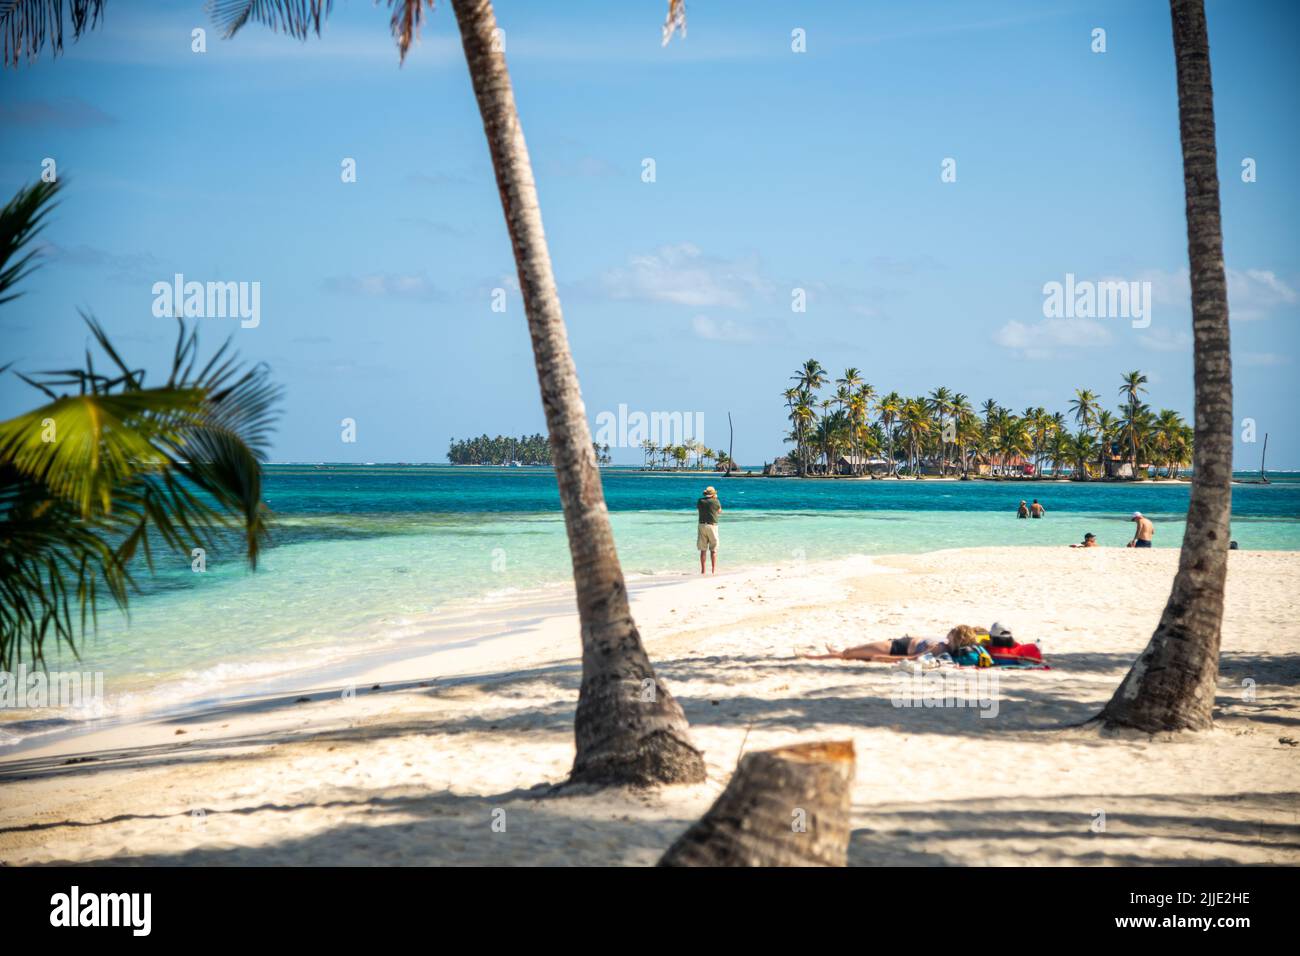 A beach in the San Blas Islands in Panama Stock Photo